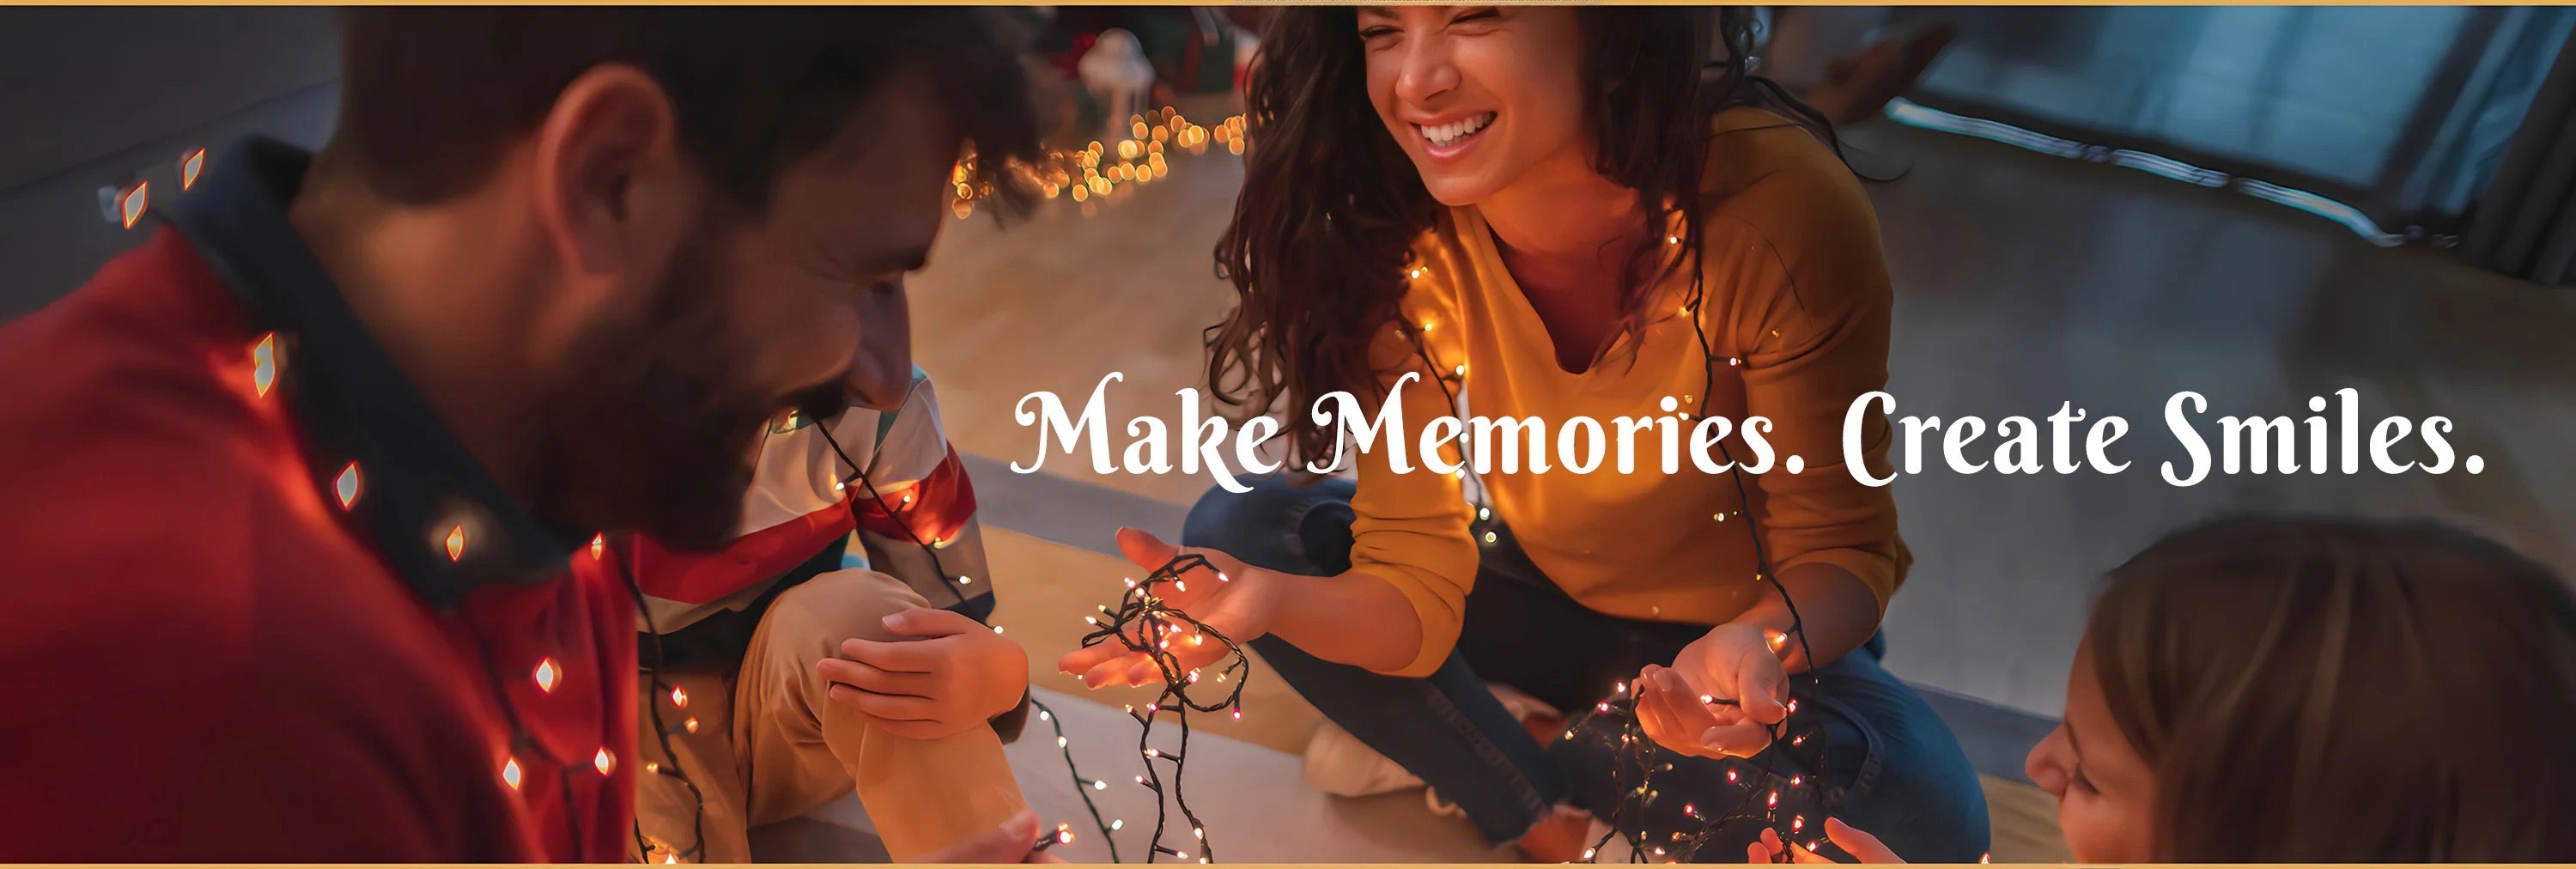 Make Memories. Create Smiles. The Christmas Light Emporium